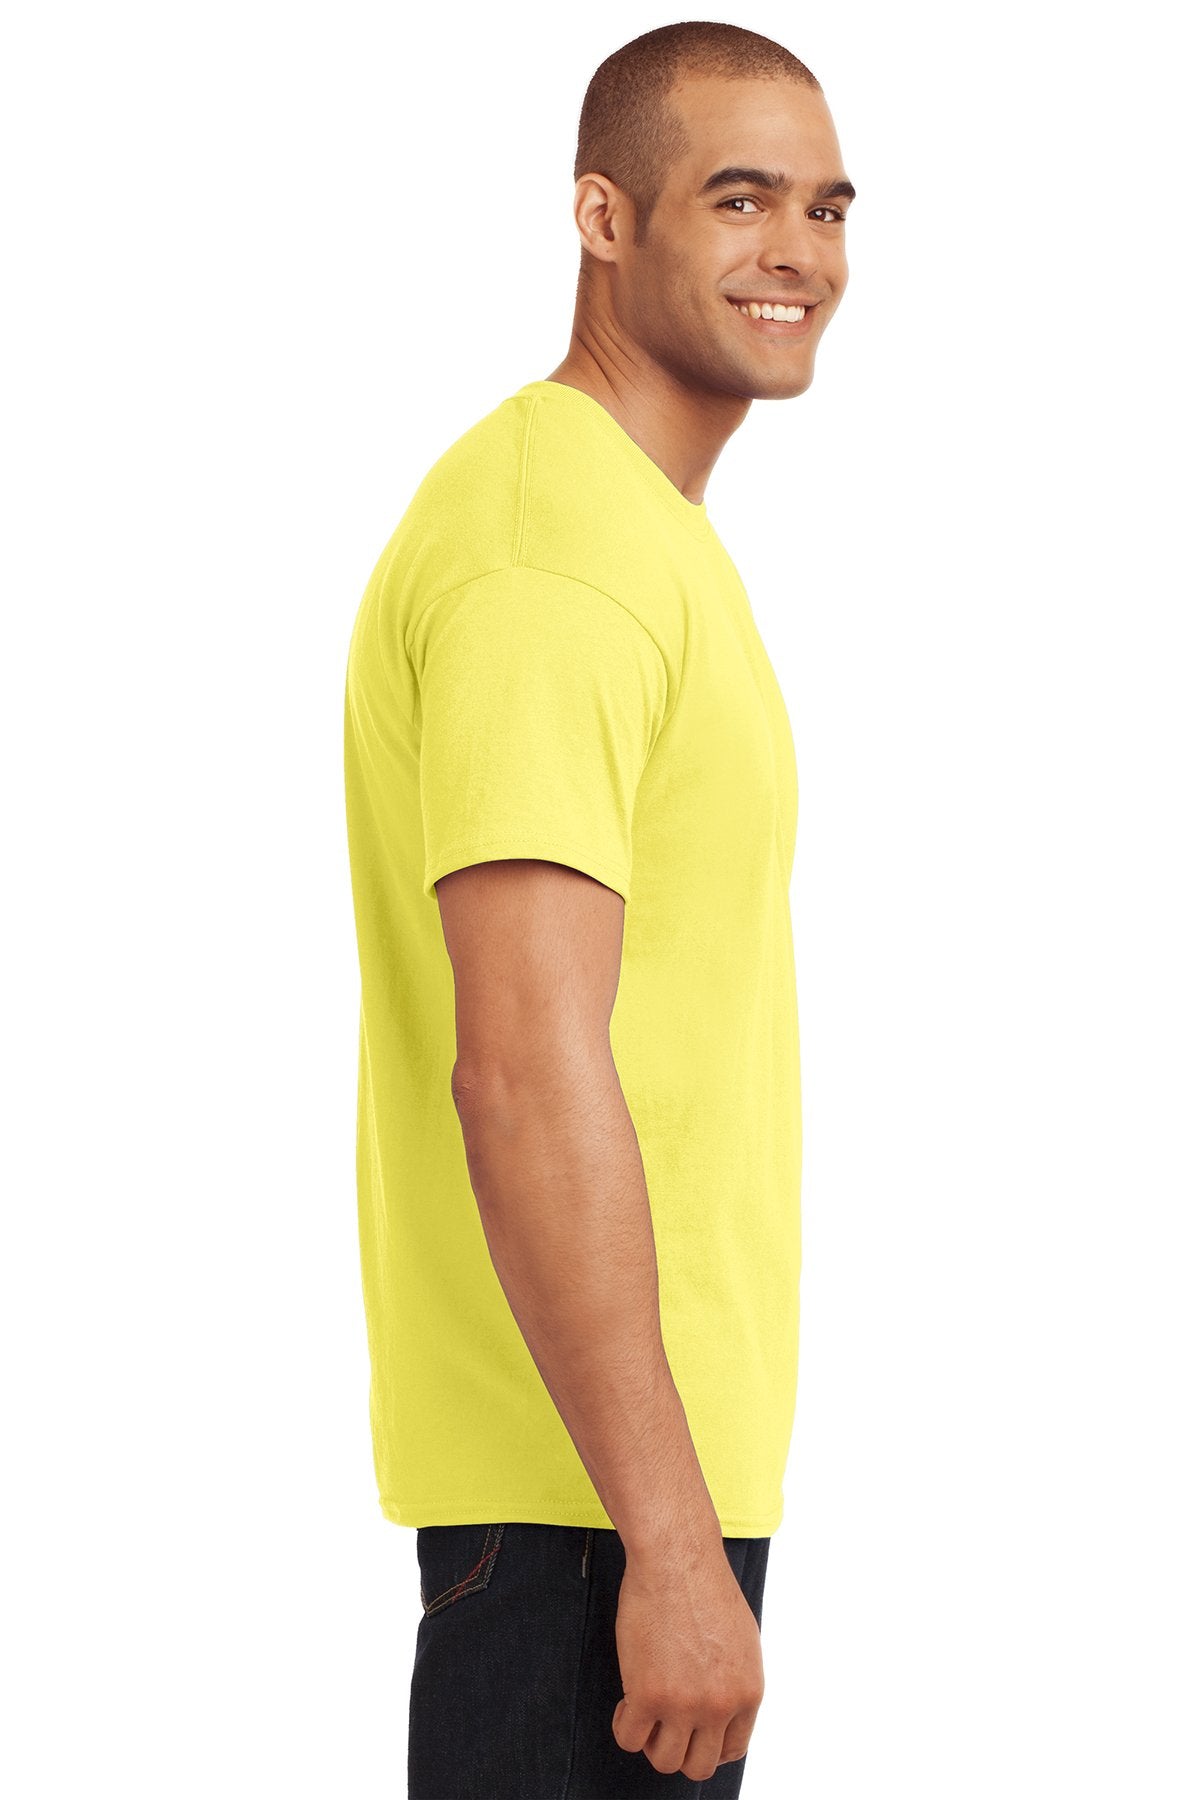 hanes ecosmart 50 50 cotton/poly t shirt 5170 yellow